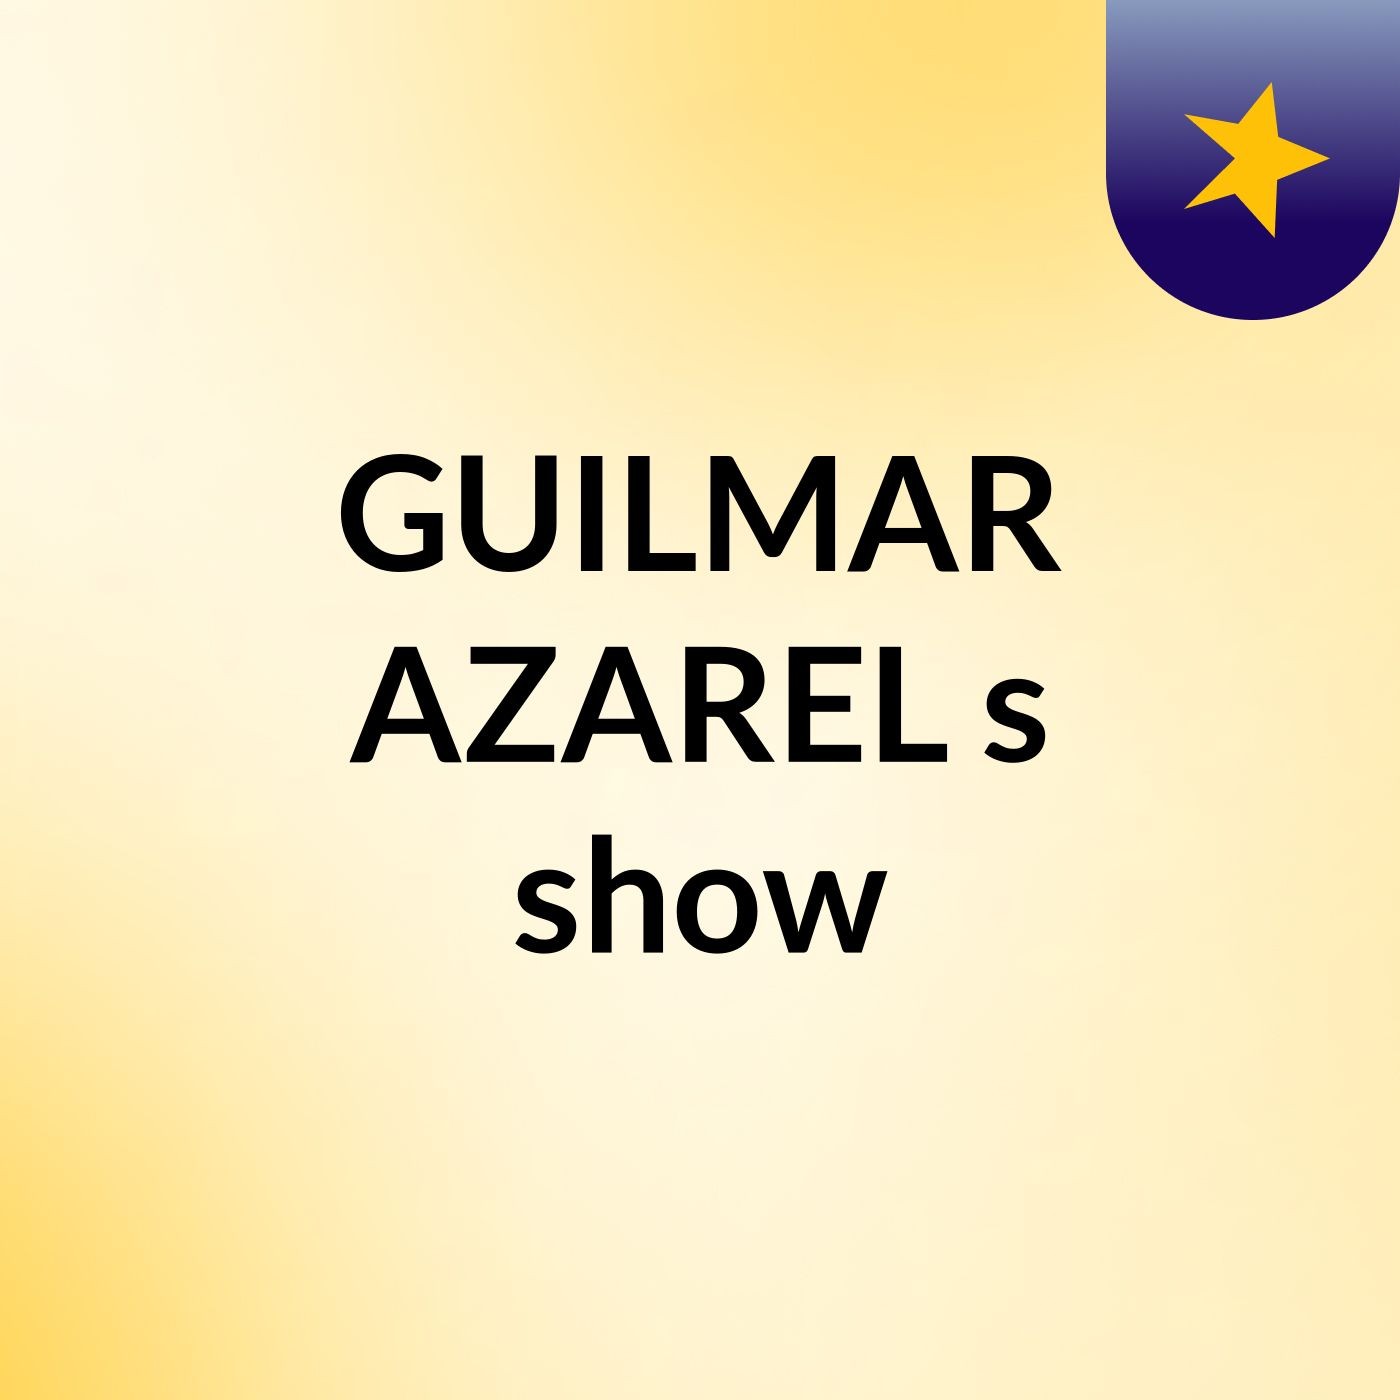 GUILMAR AZAREL's show